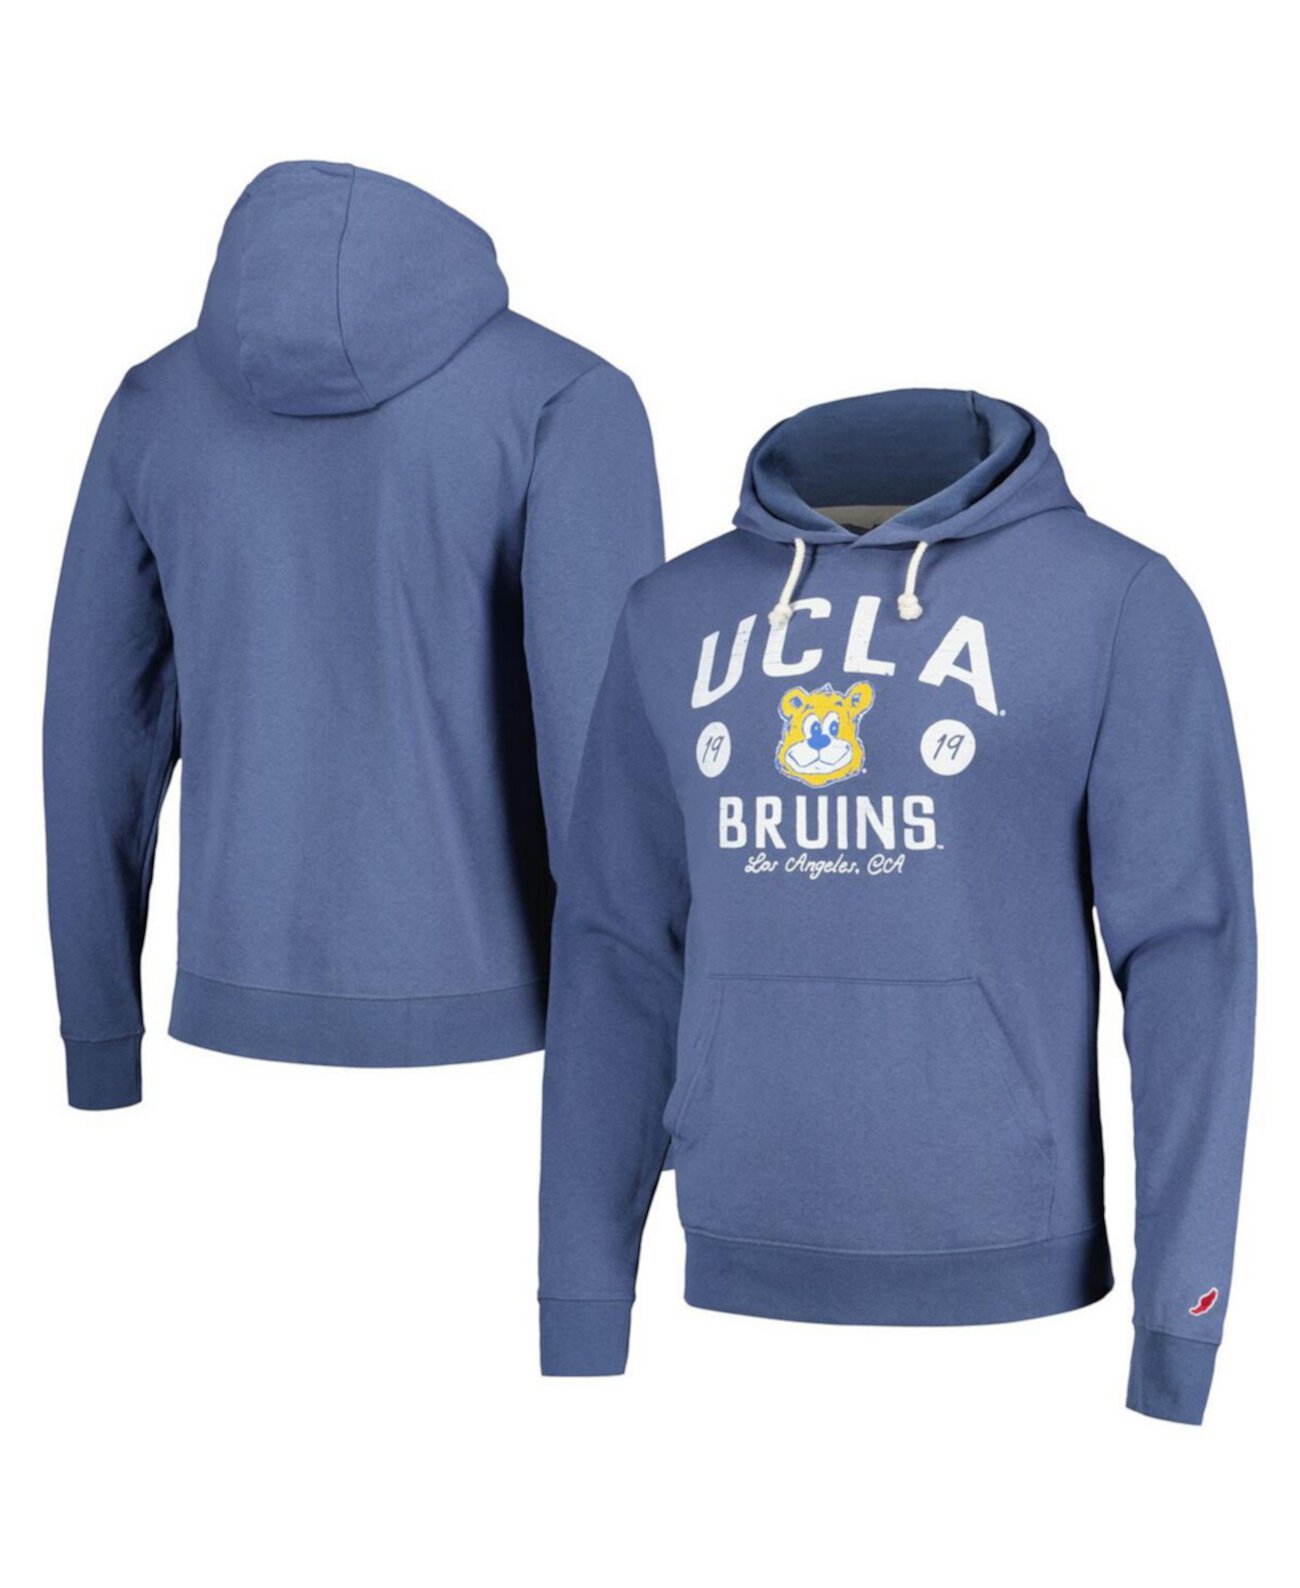 Мужская синяя рваная толстовка с капюшоном UCLA Bruins Bendy Arch Essential League Collegiate Wear